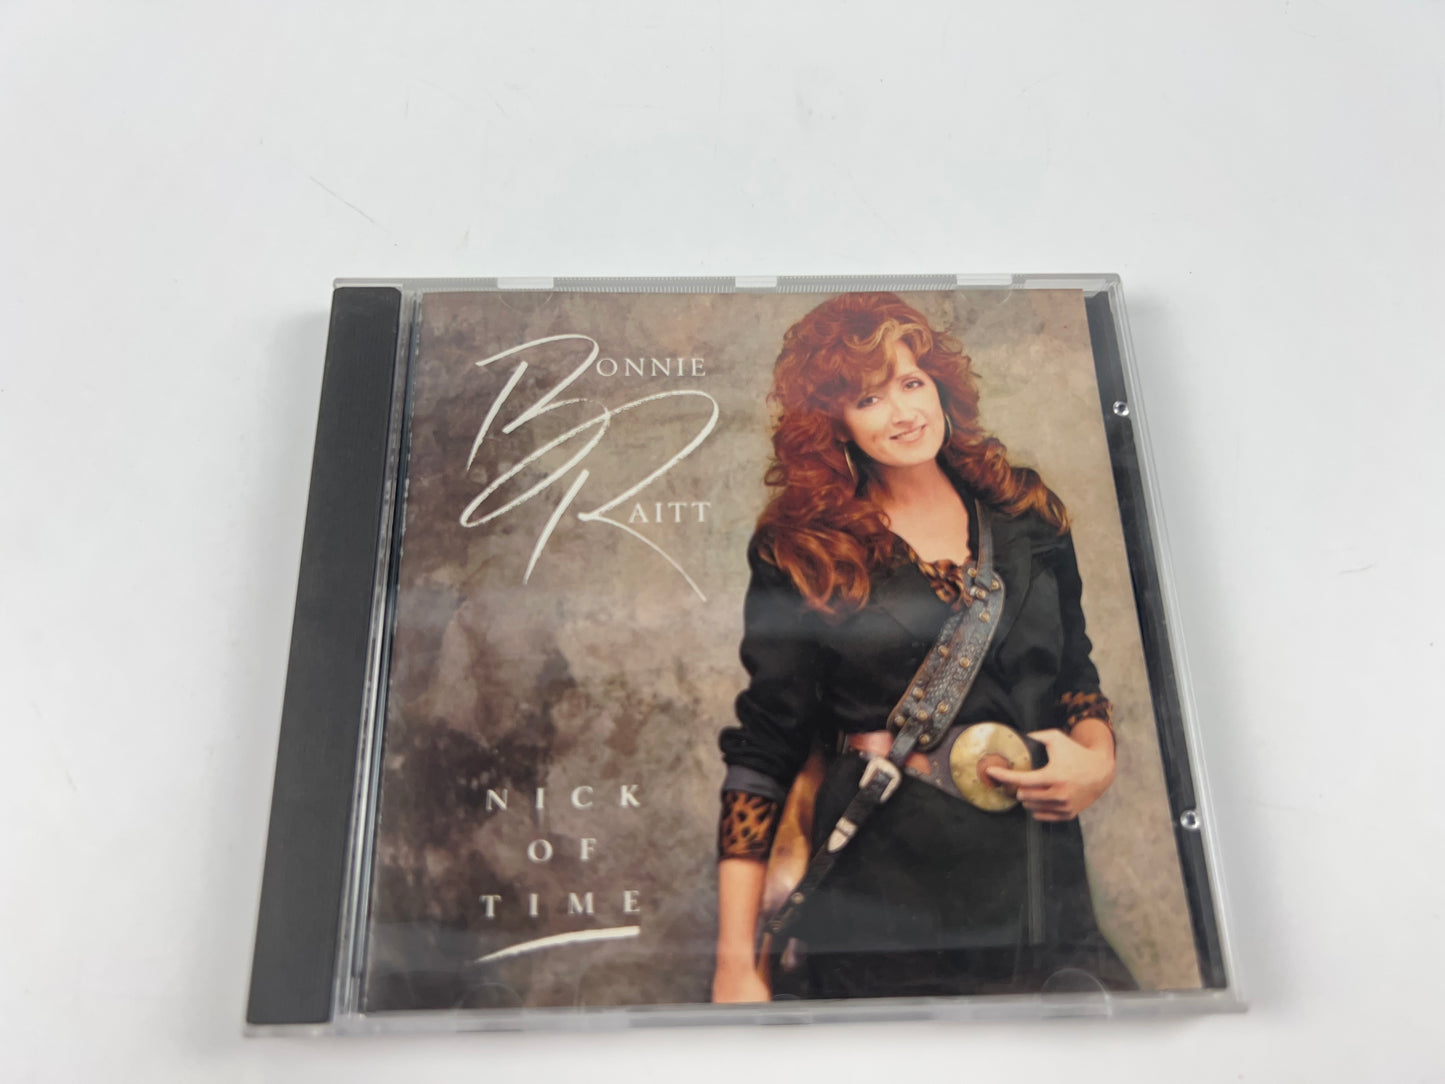 Nick of time CD Country Bonnie Raitt 1980s 11 Song Studio Album